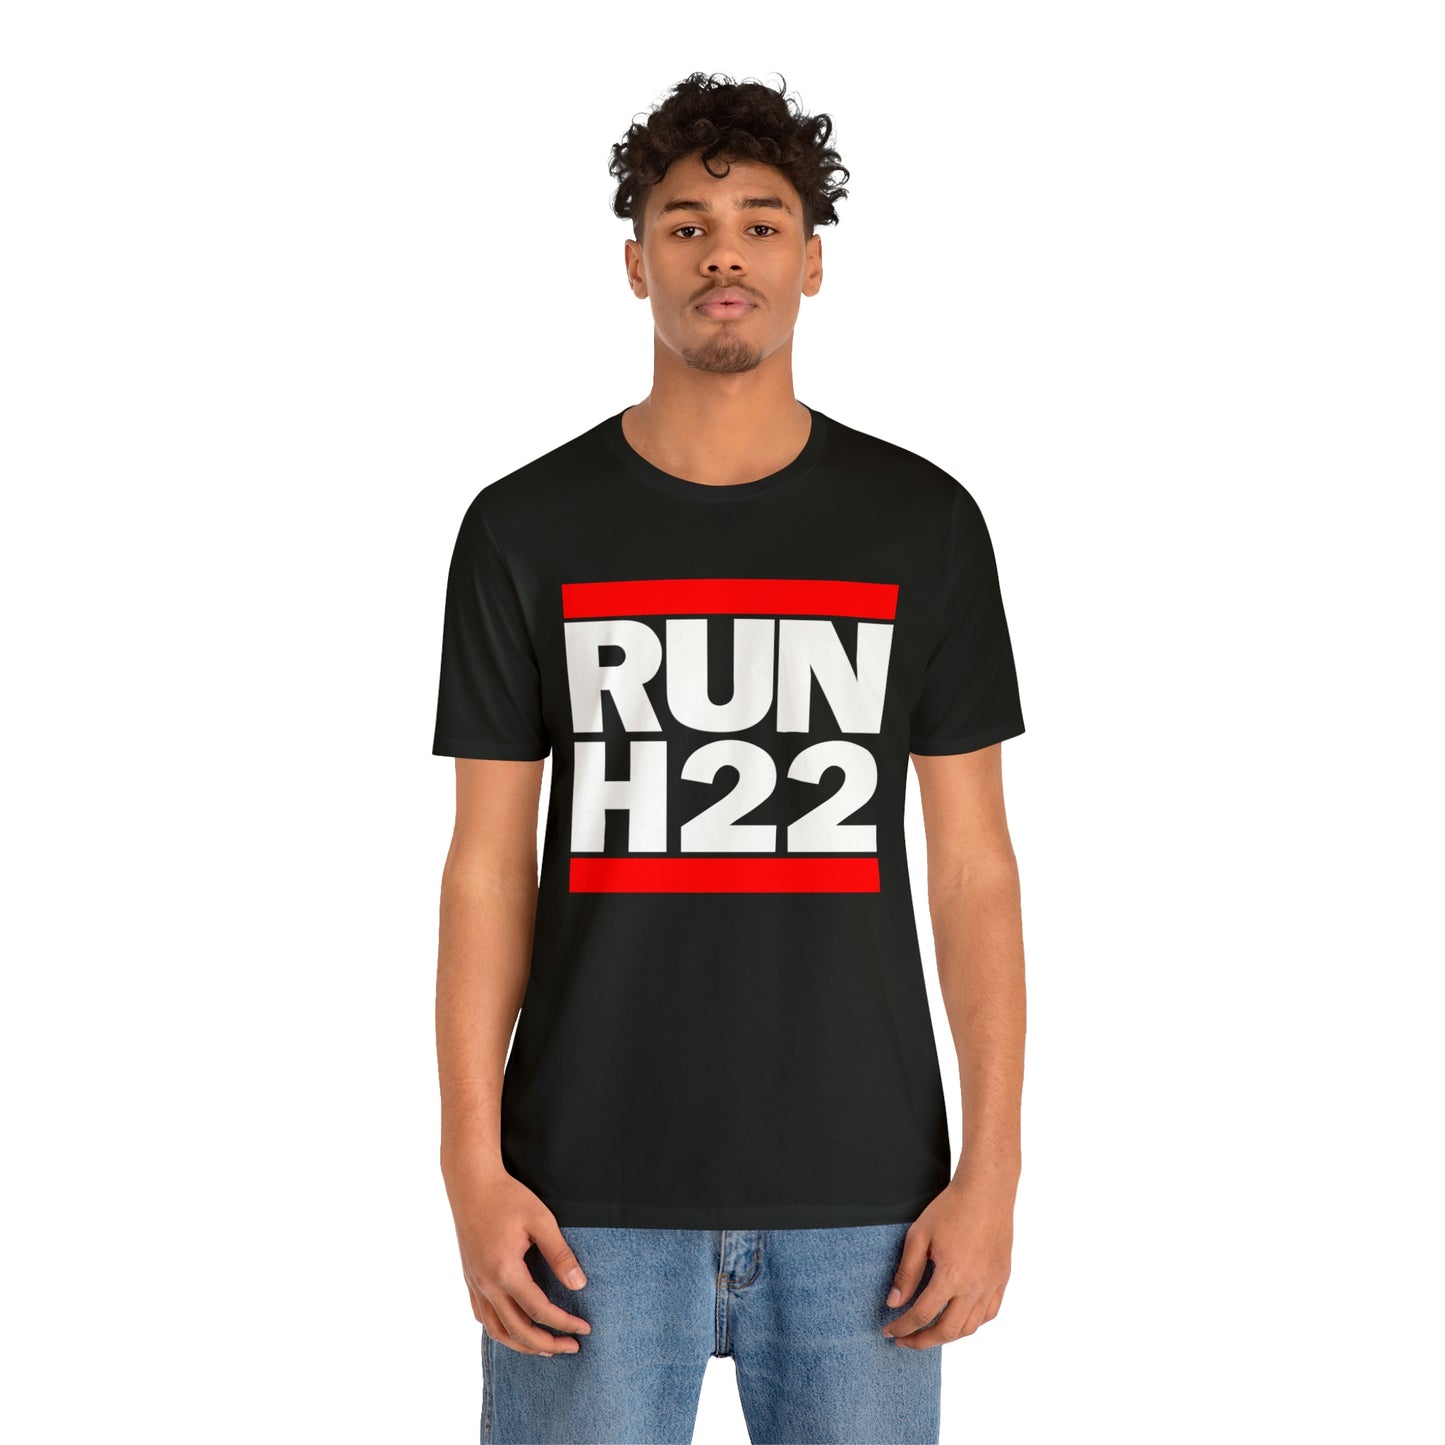 Run H22  Shirt